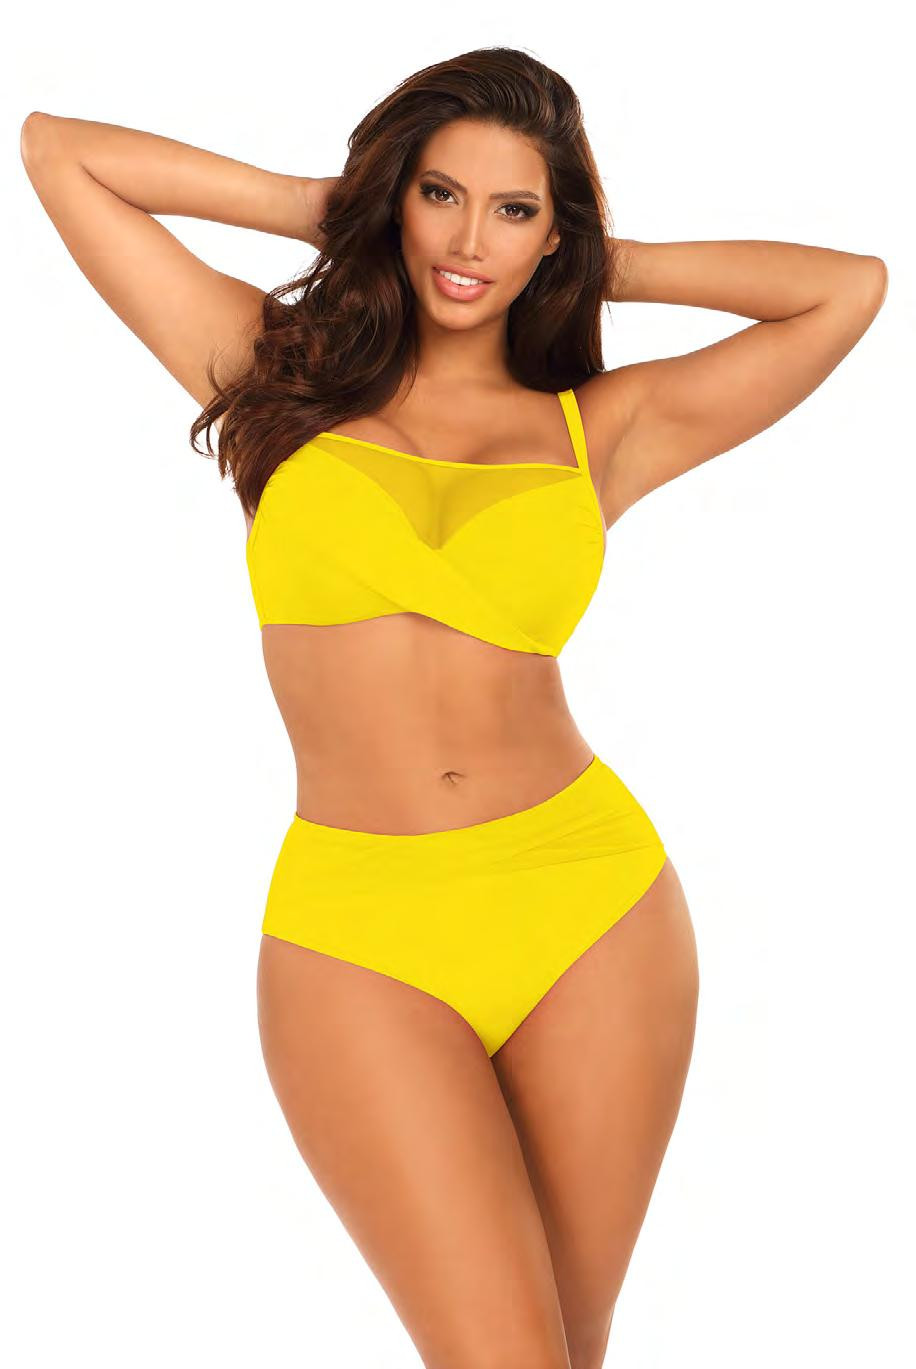 Dámské dvoudílné plavky Fashion 16 S1002N2-21 žluté - Self 40B